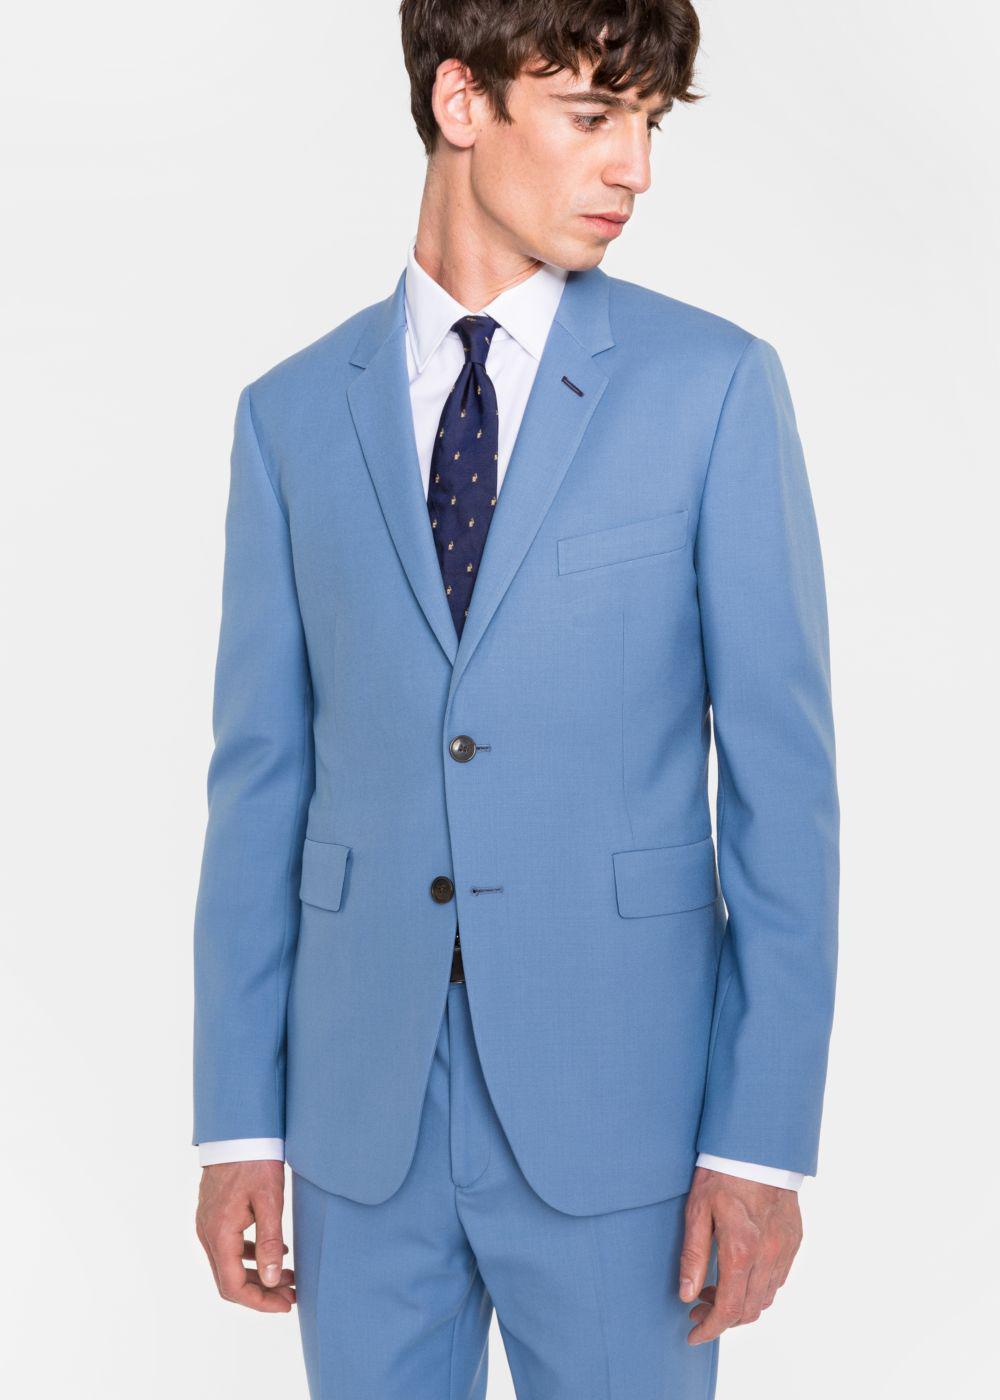 Paul Smith The Kensington - Men's Slim-fit Light Blue Wool 'suit To Travel  In' for Men - Lyst